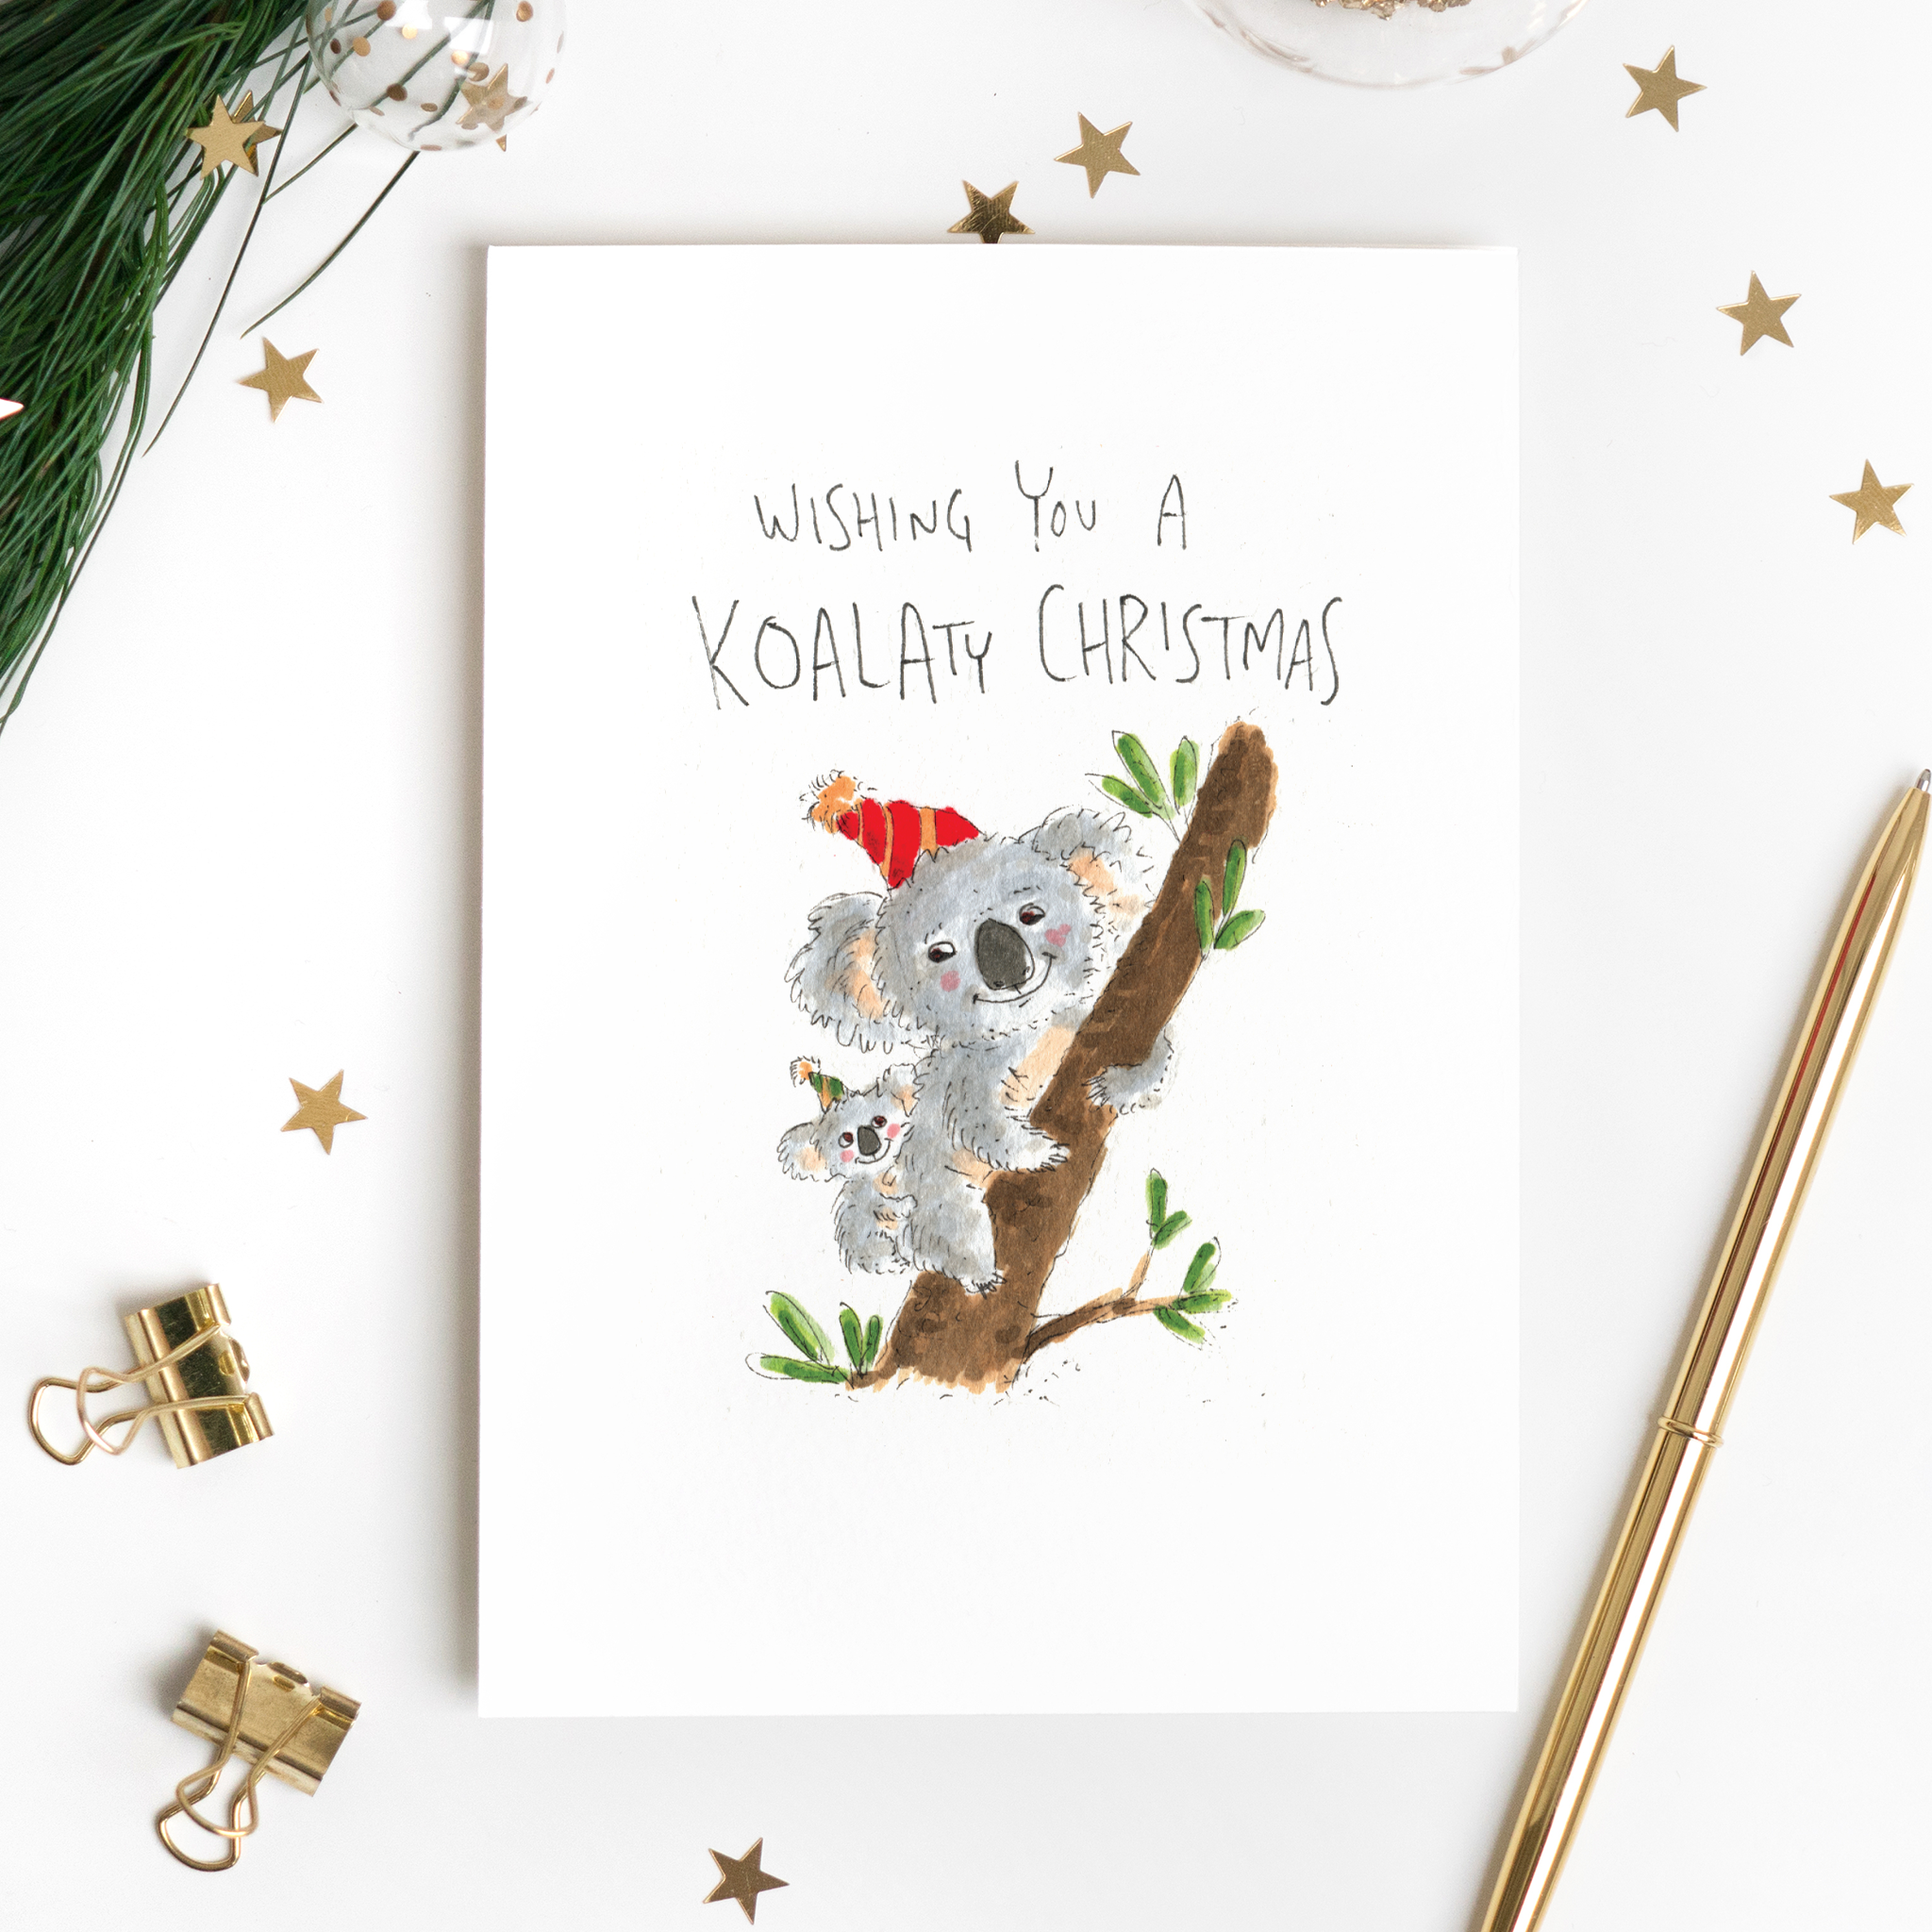 Have a Koalaty Christmas